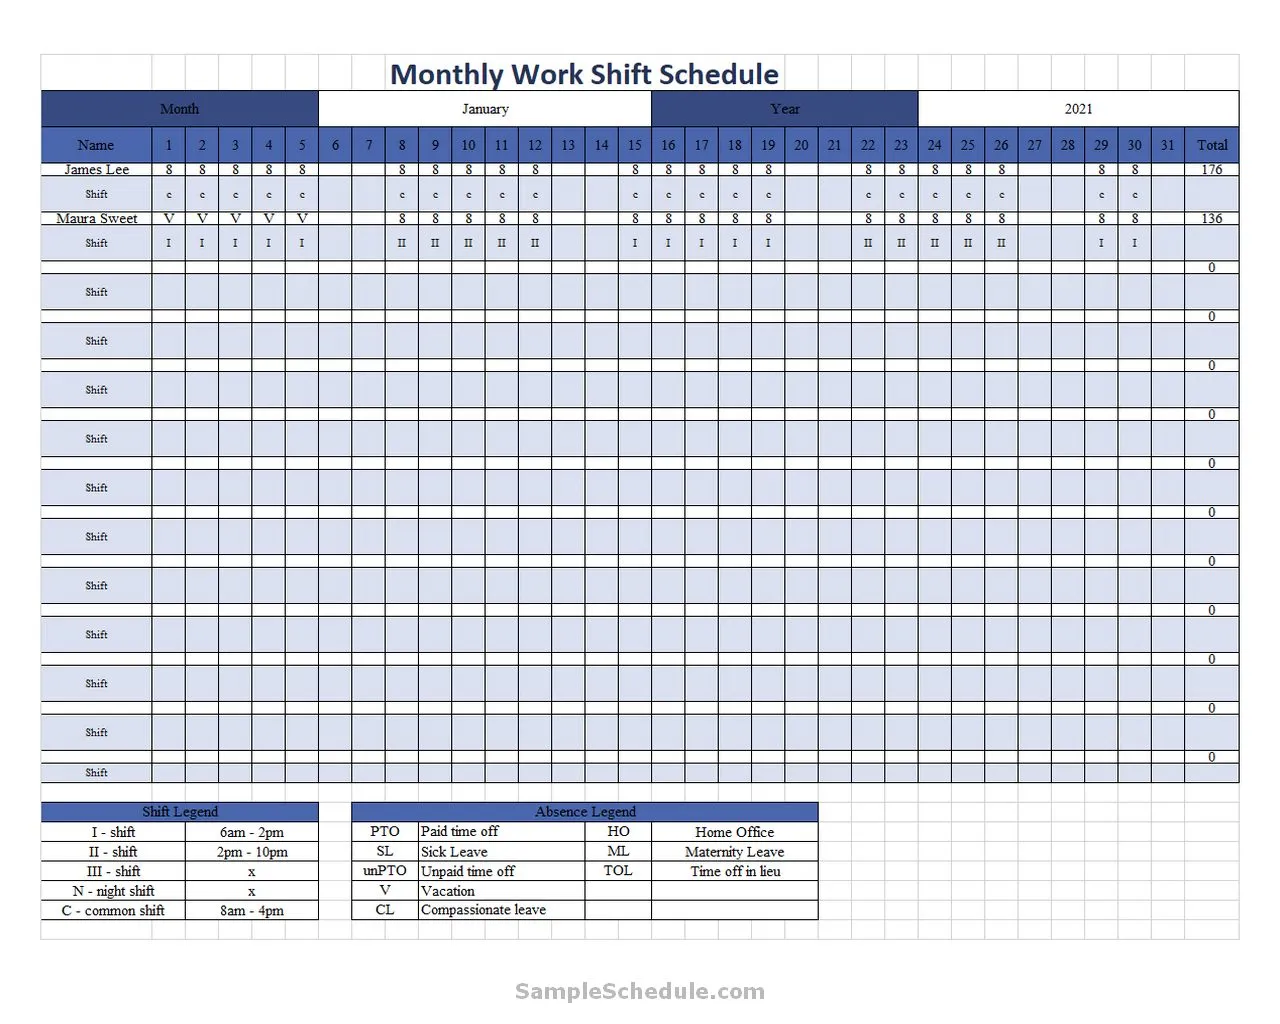 Monthly Work Schedule Template 08